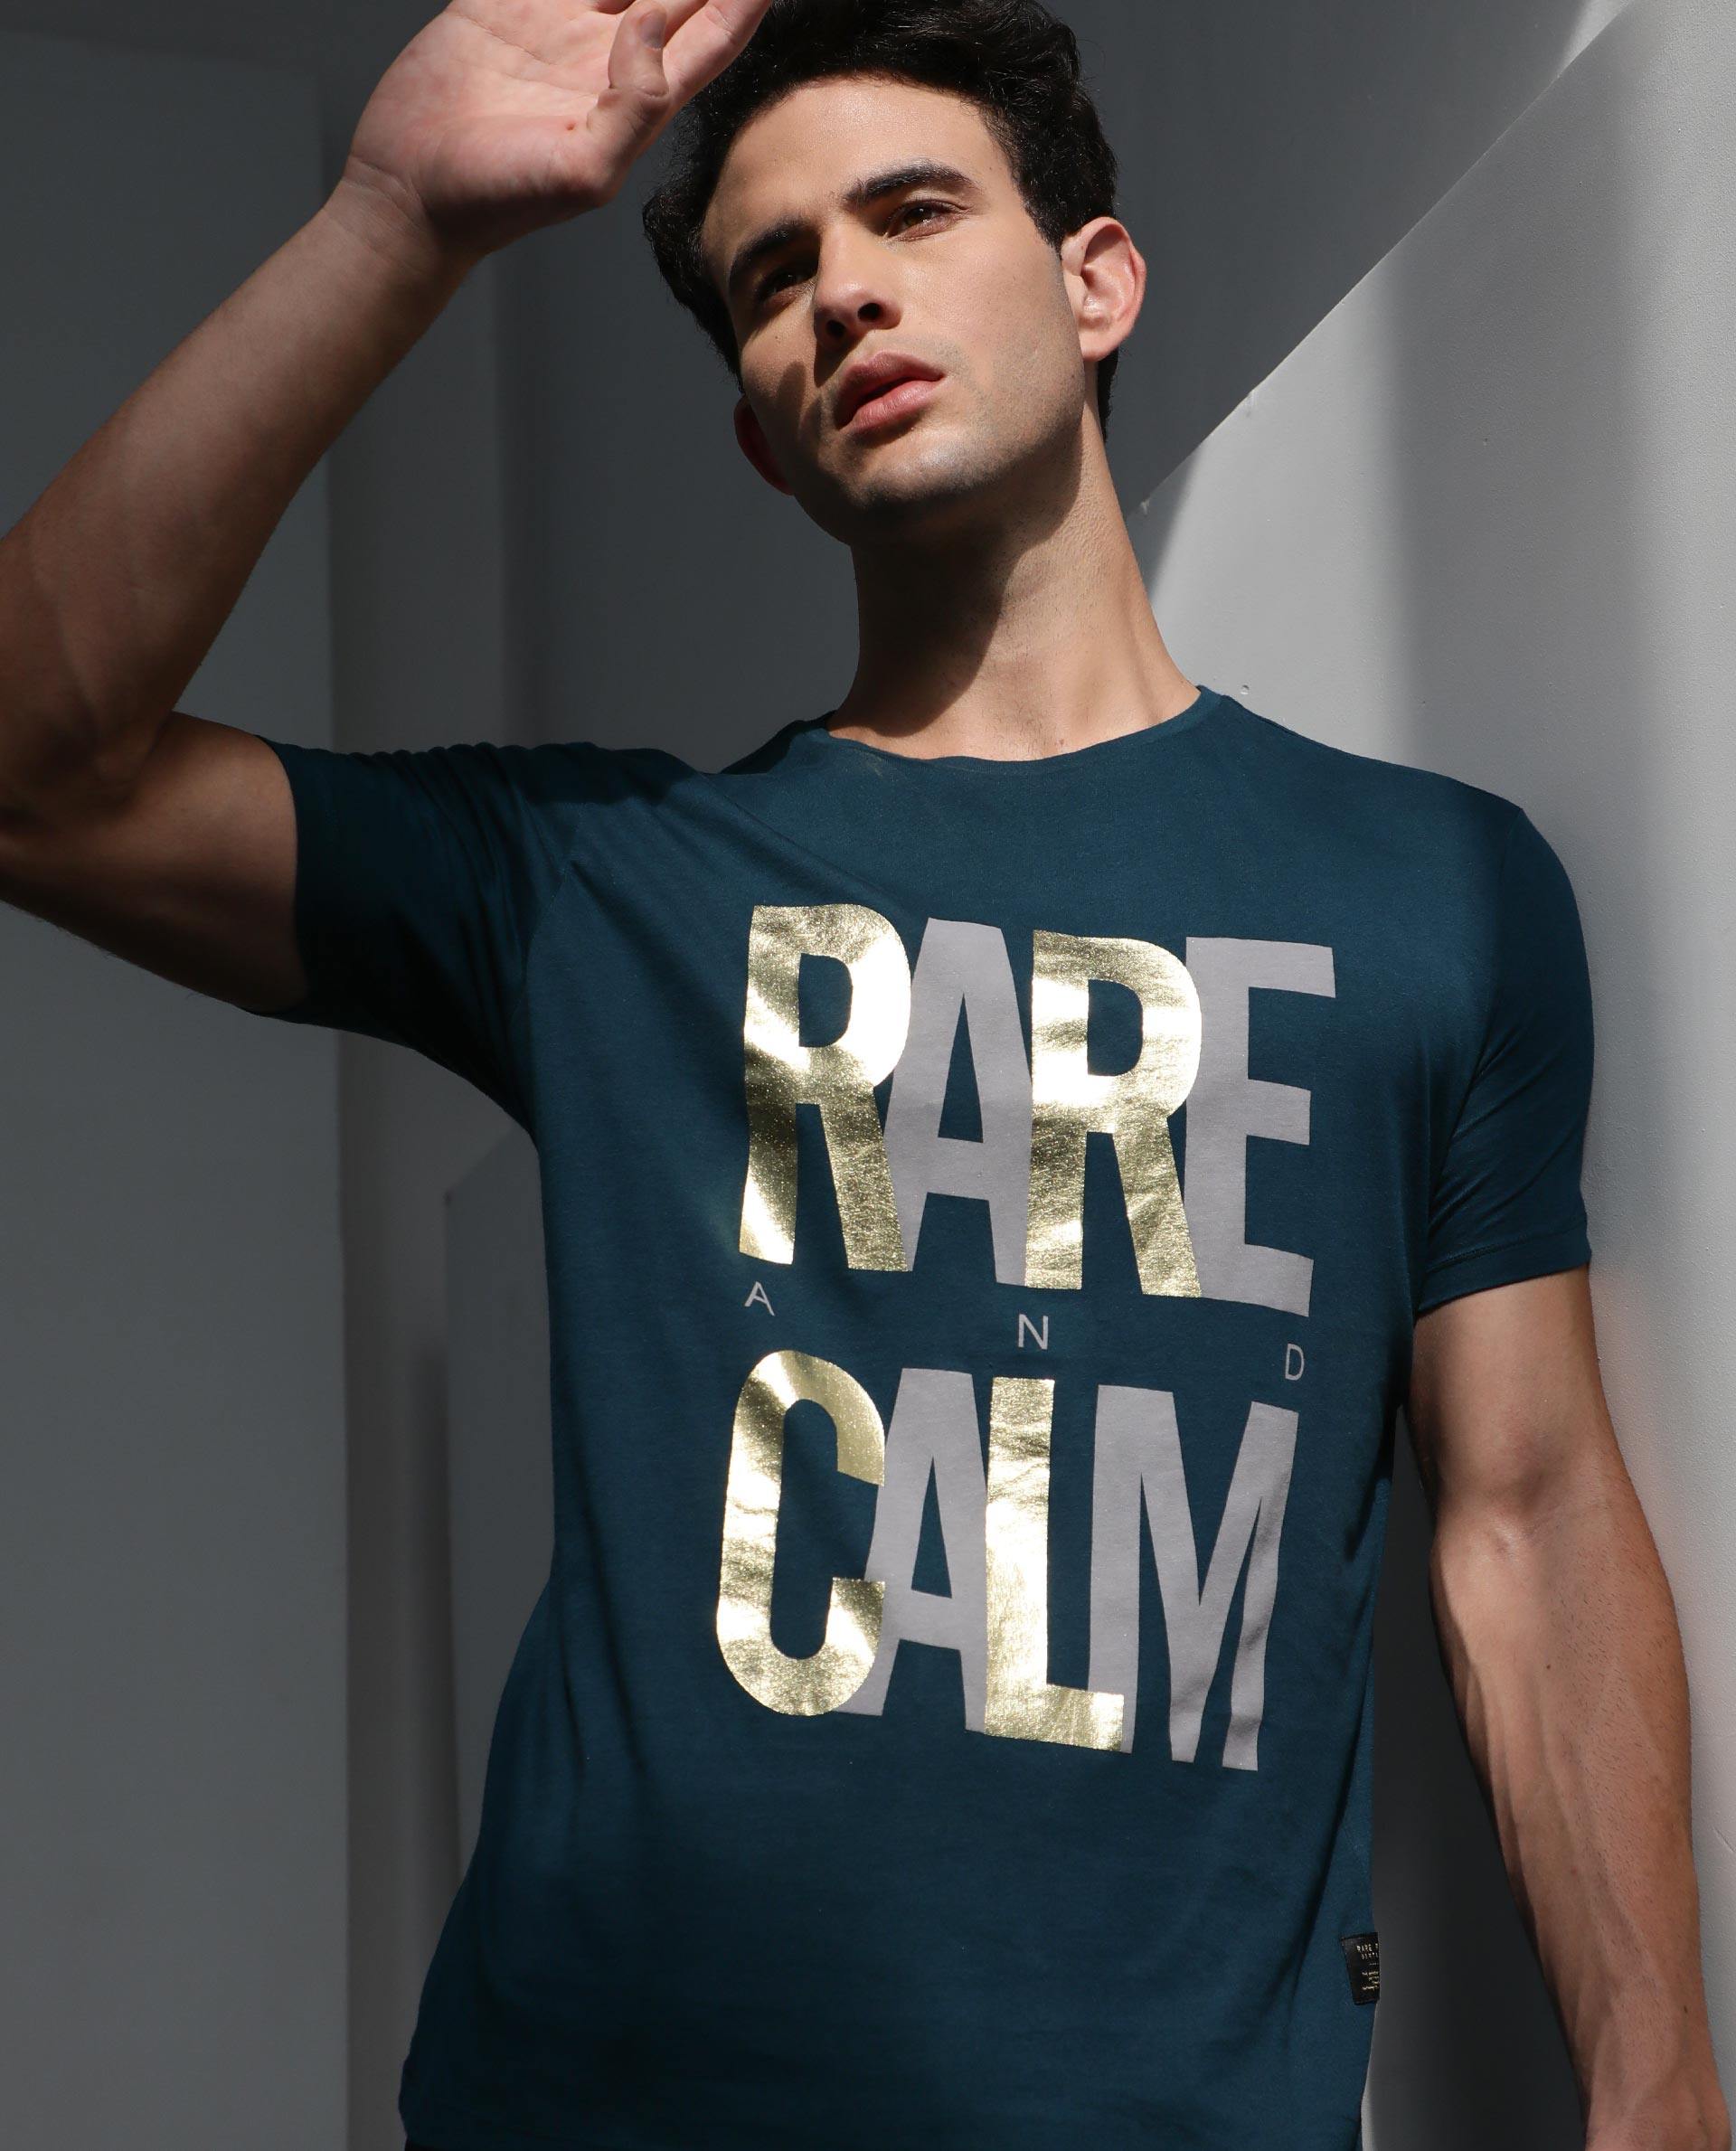 Buy Rare & Calm- Graphic Men'S T Shirt-Green Rare Rabbit